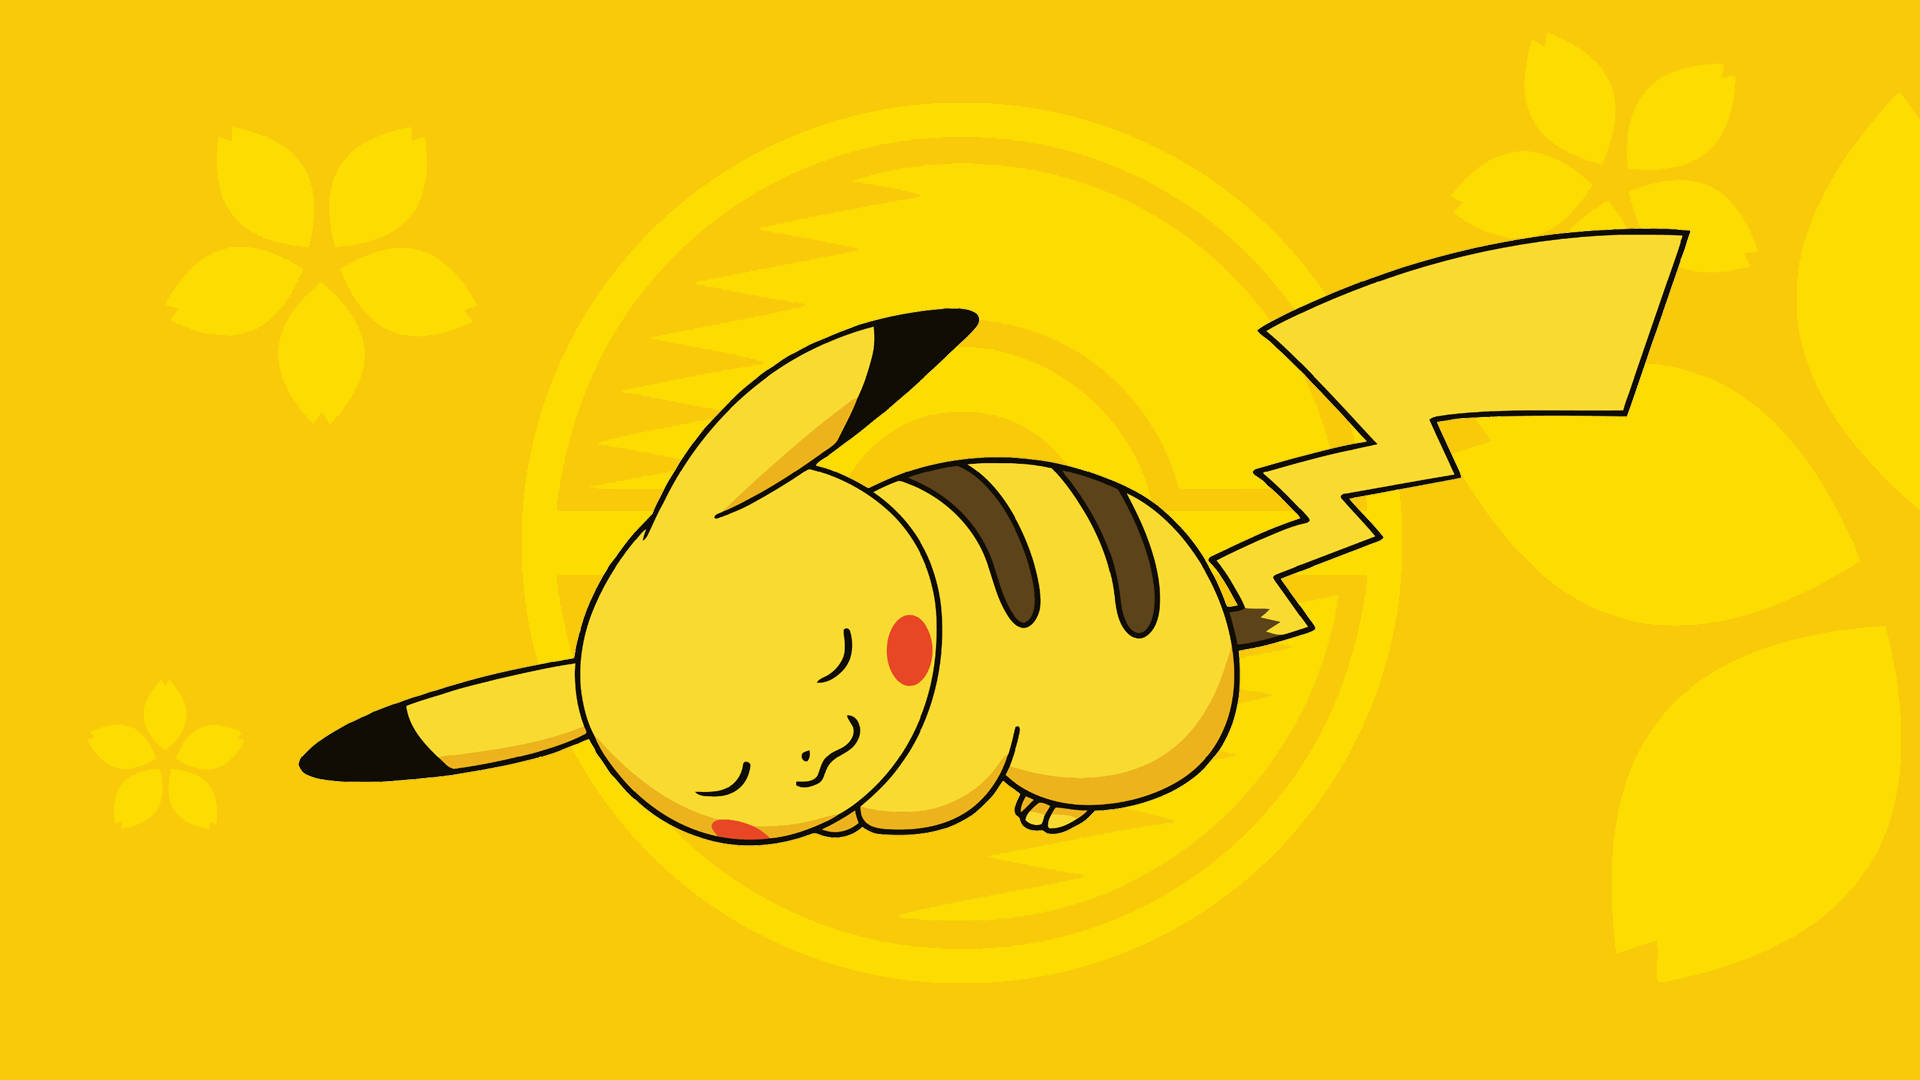 Lethargic Sleeping Pikachu Wallpaper